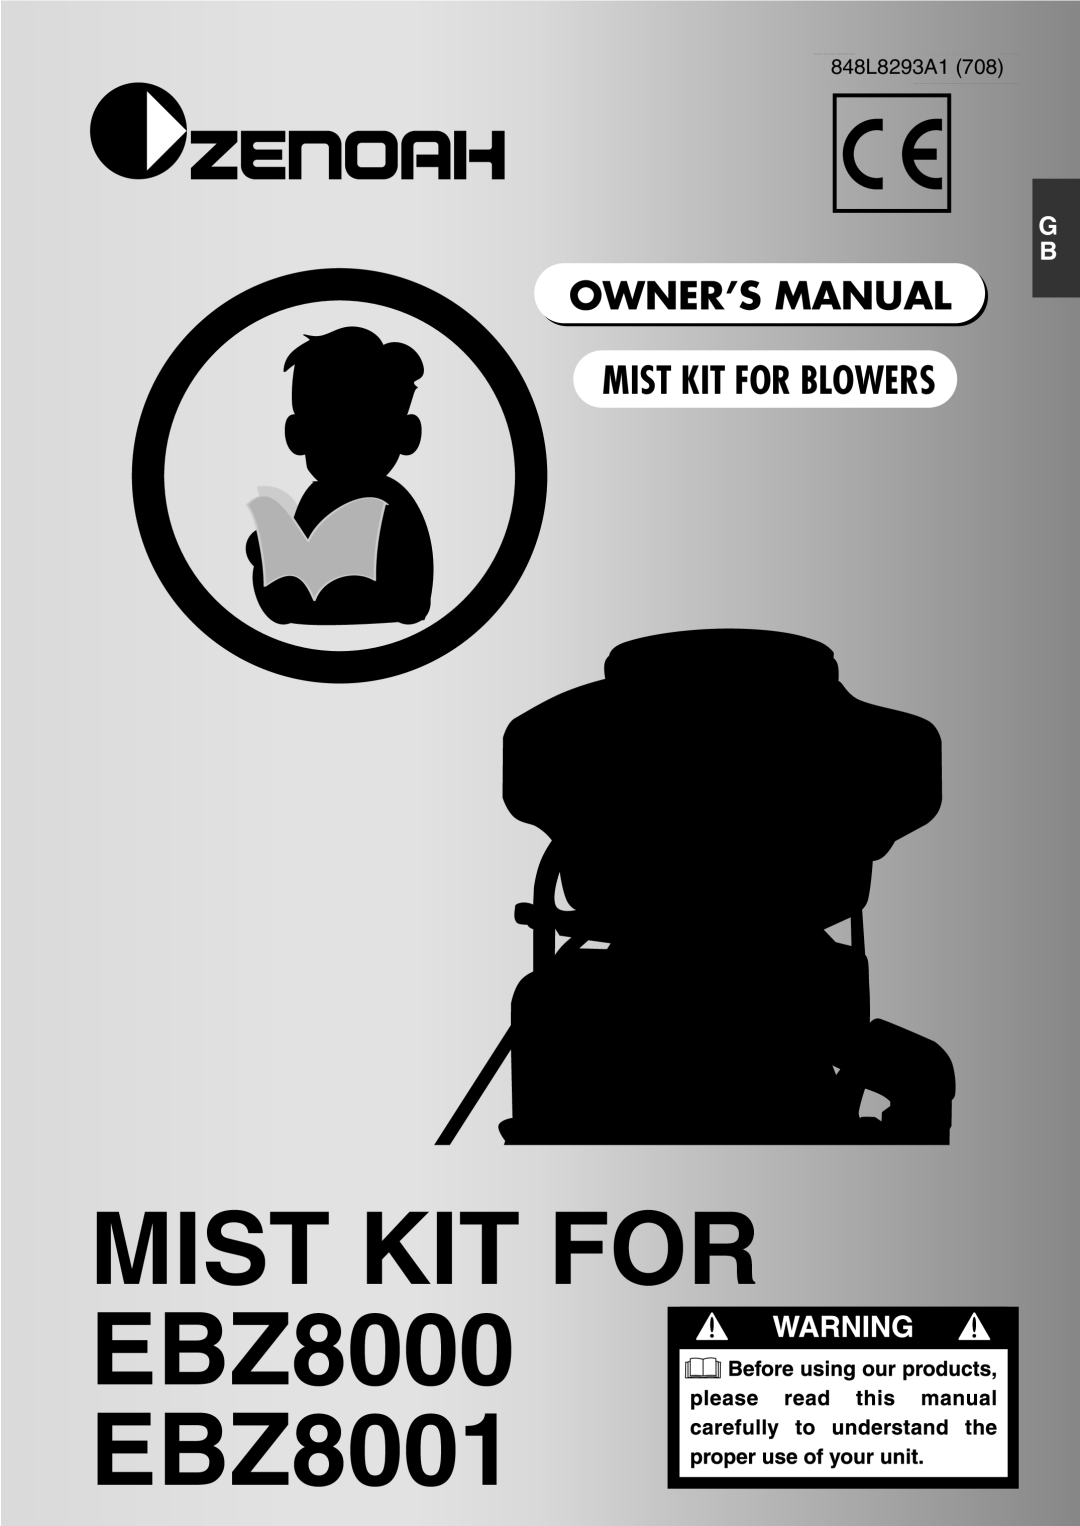 Zenoah owner manual MIST KIT FOR EBZ8000 EBZ8001 GB-1, Owner’S Manual, Mist Kit For Blowers, 848L8293A1 